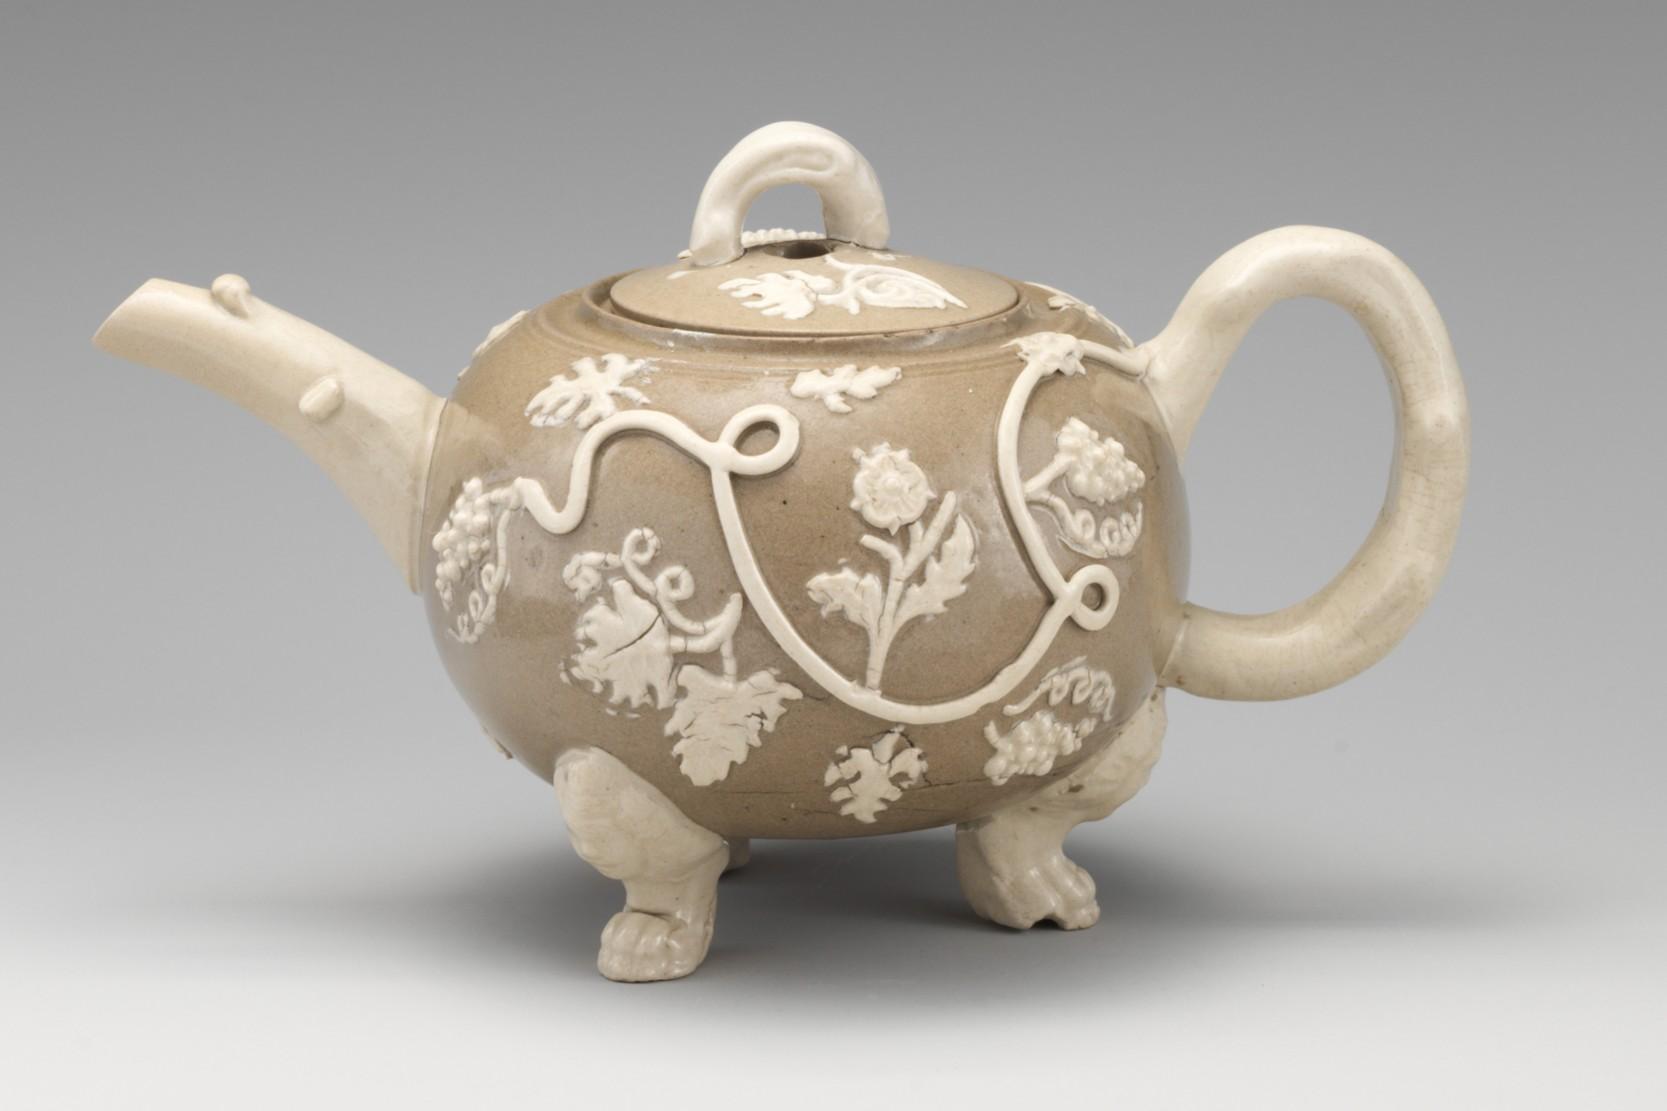 British, Staffordshire, Teapot, ca. 1740. Salt-glazed stoneware.